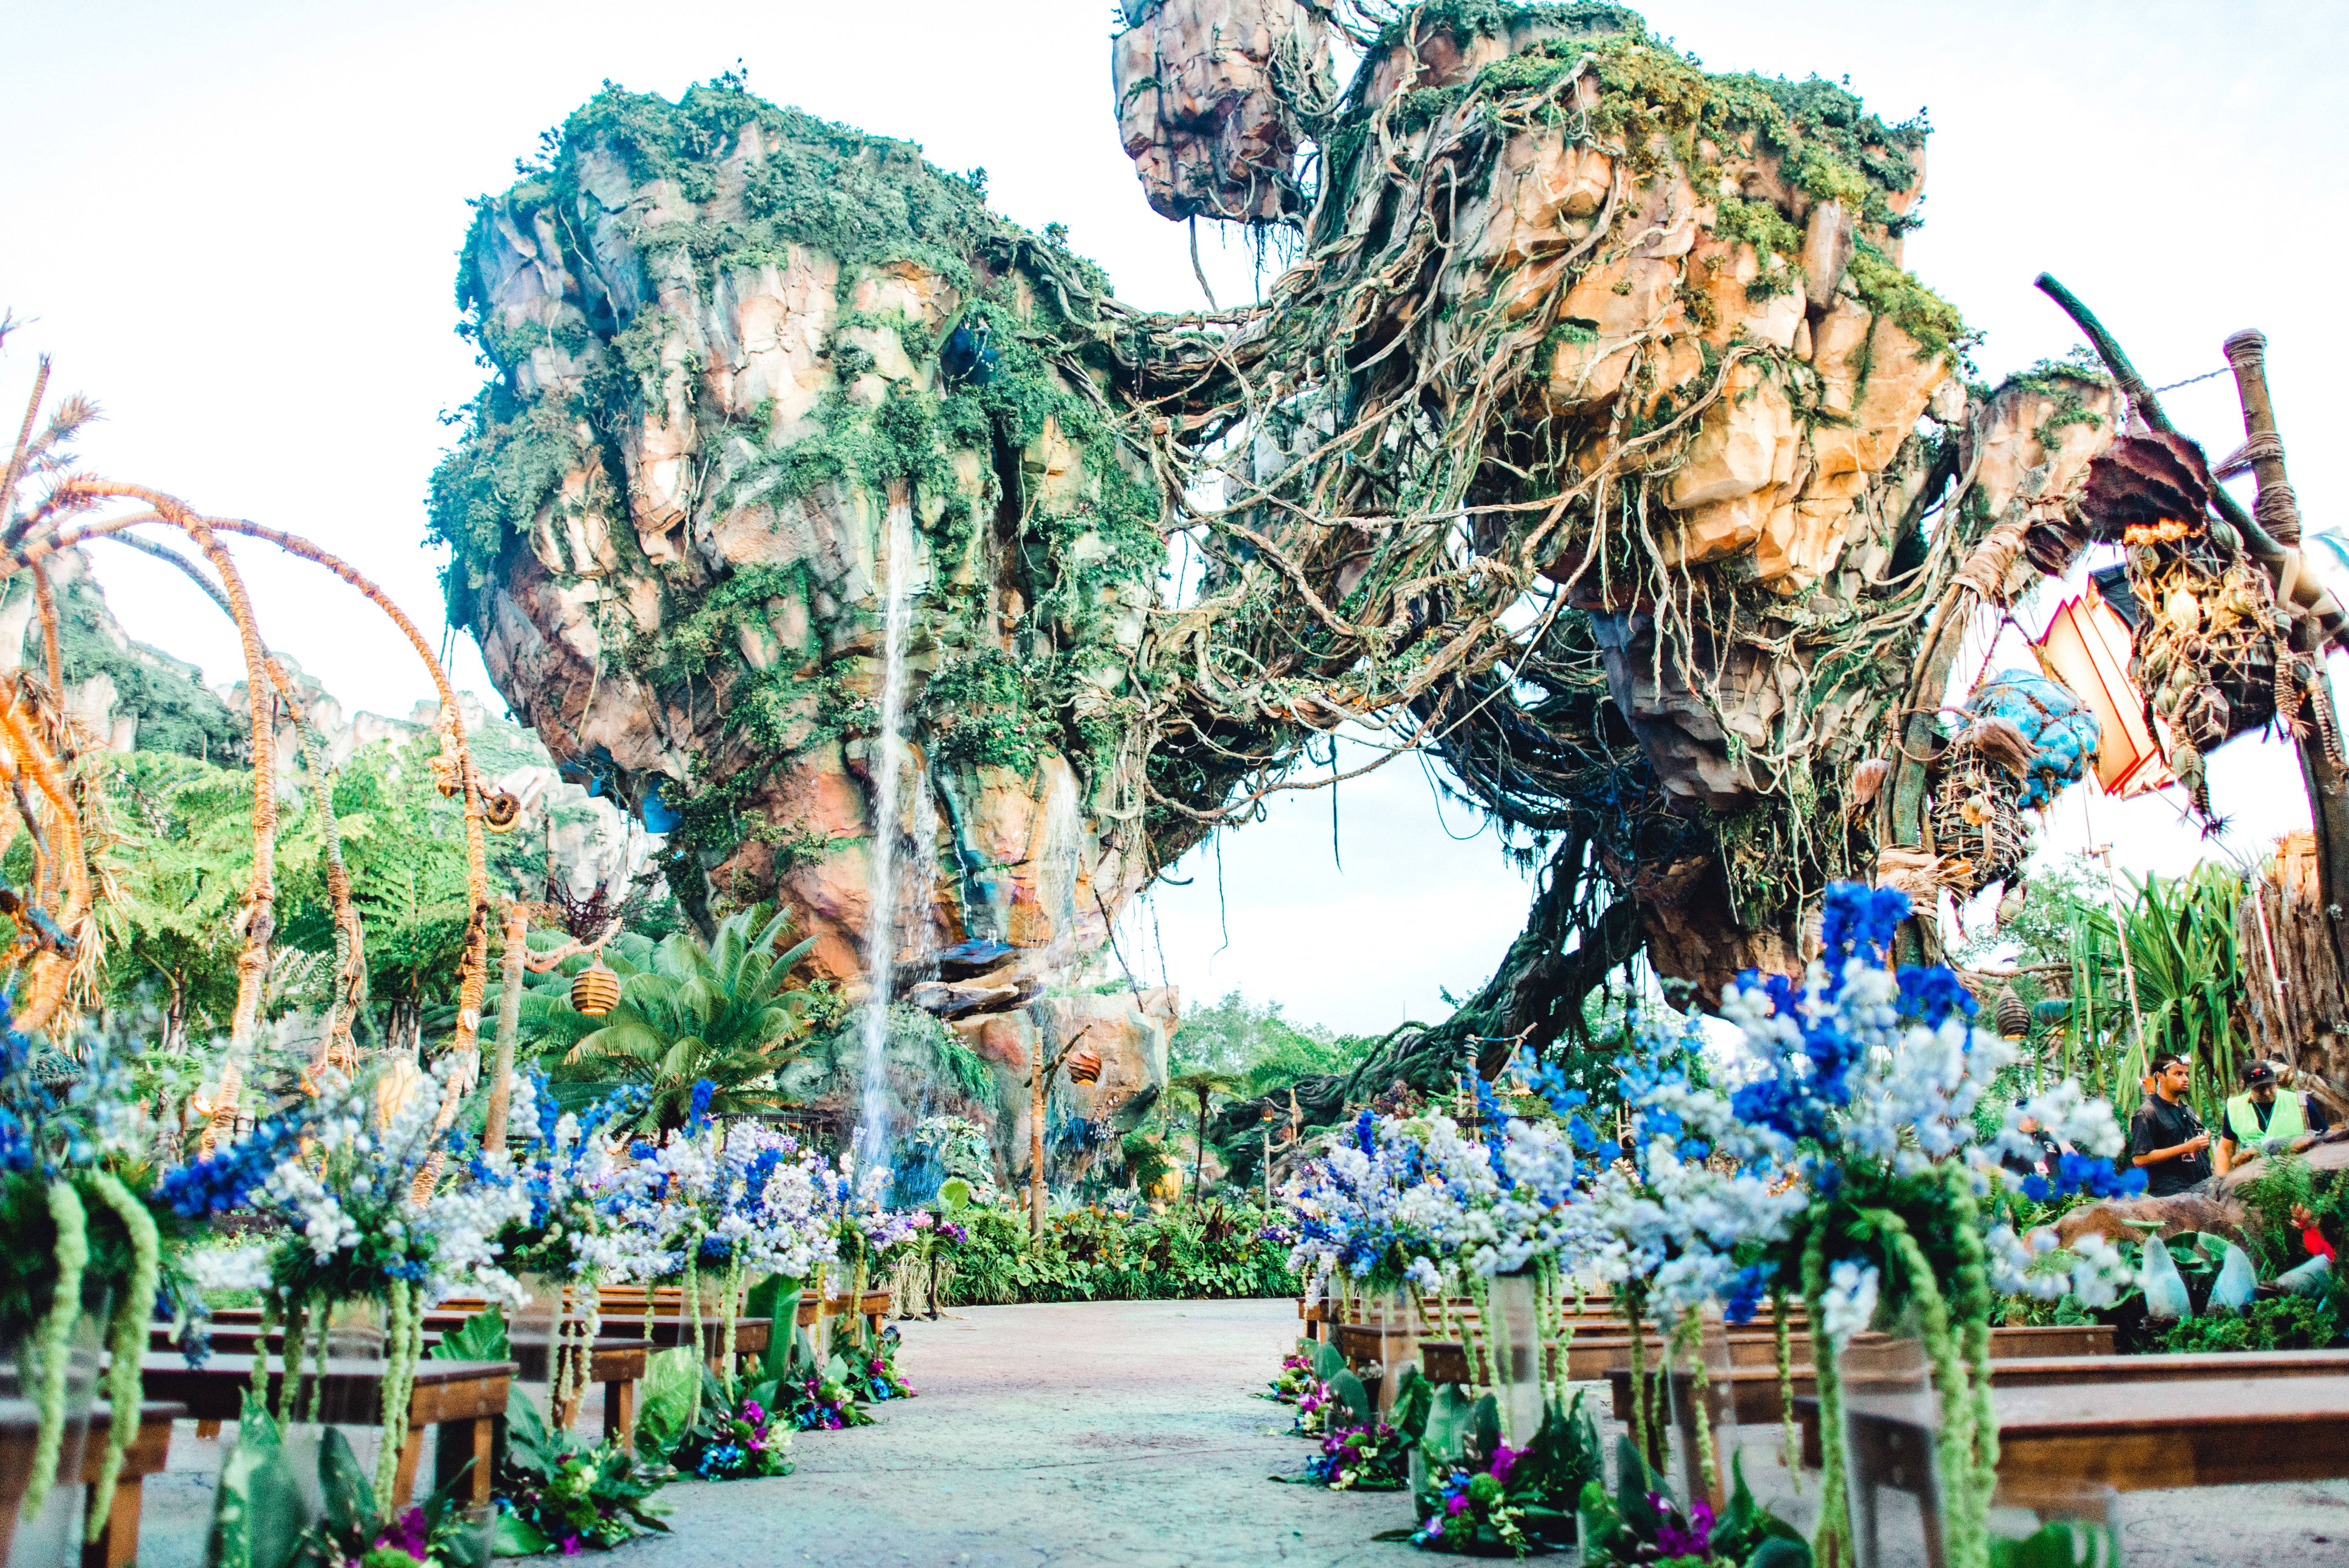 Wedding at Pandora - The World of Avatar